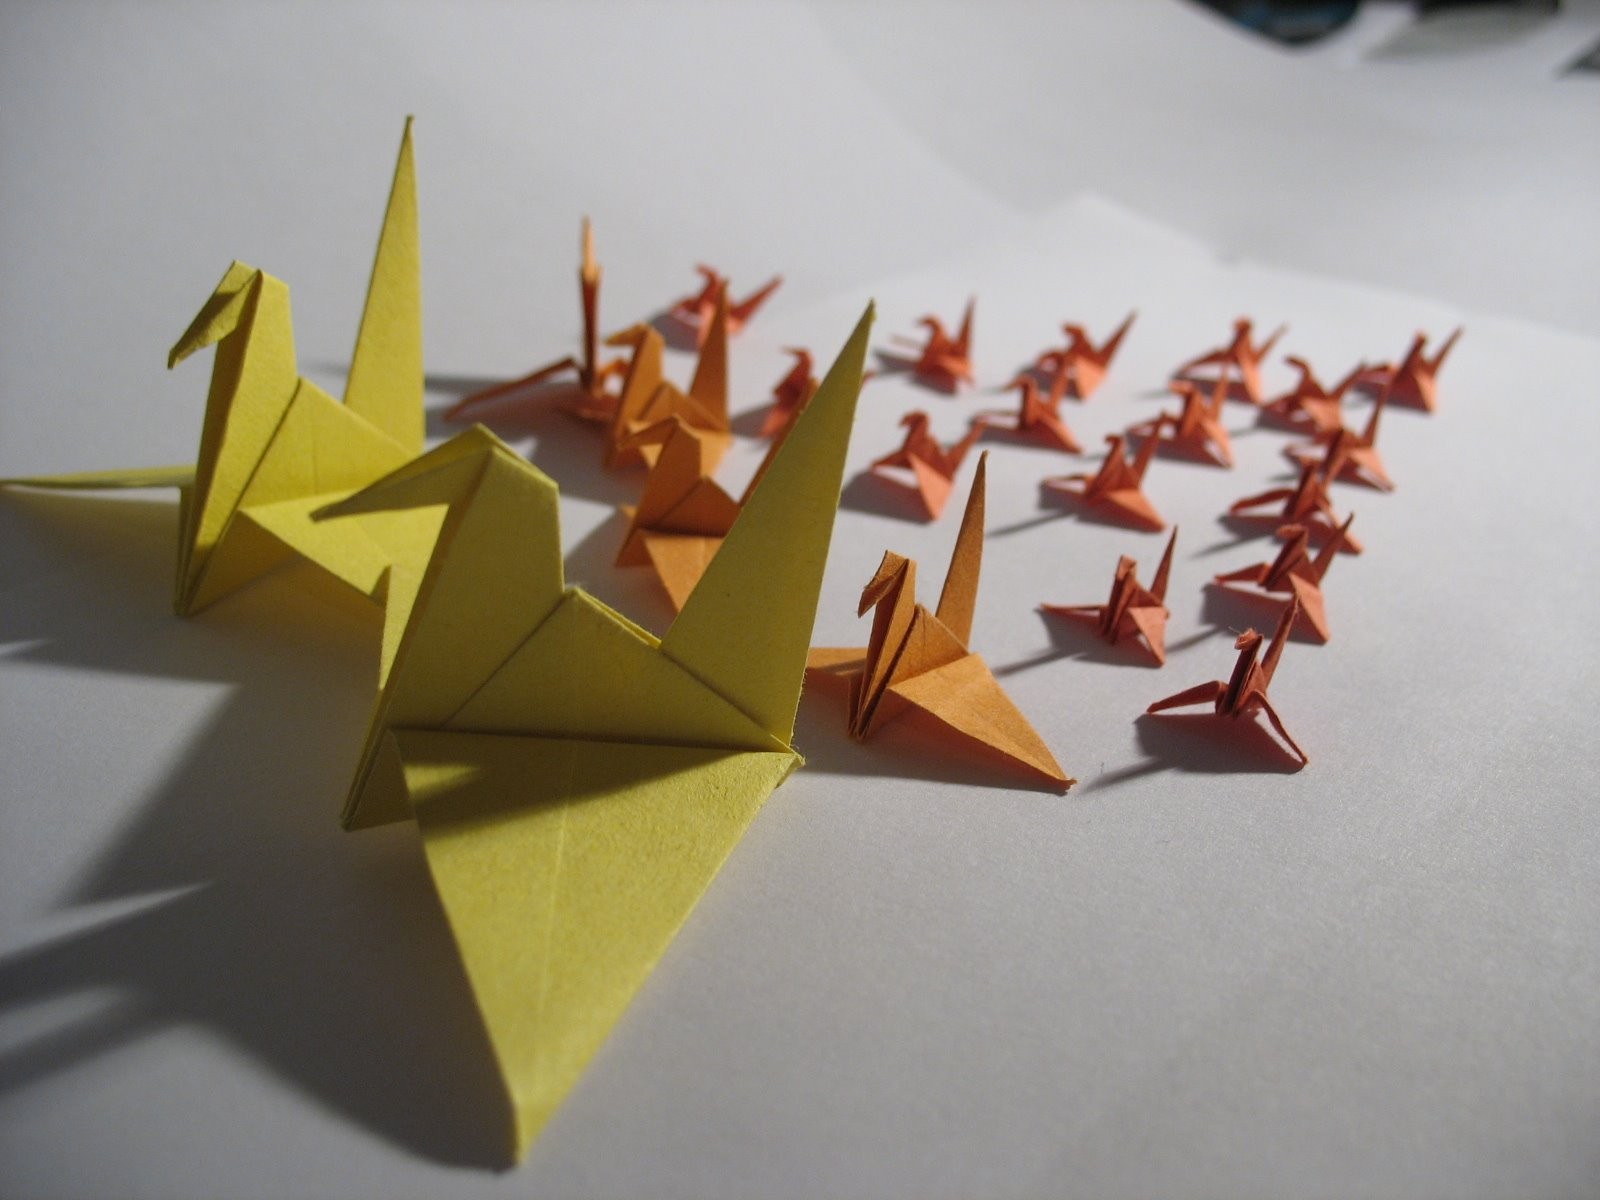 General 1600x1200 paper cranes yellow orange